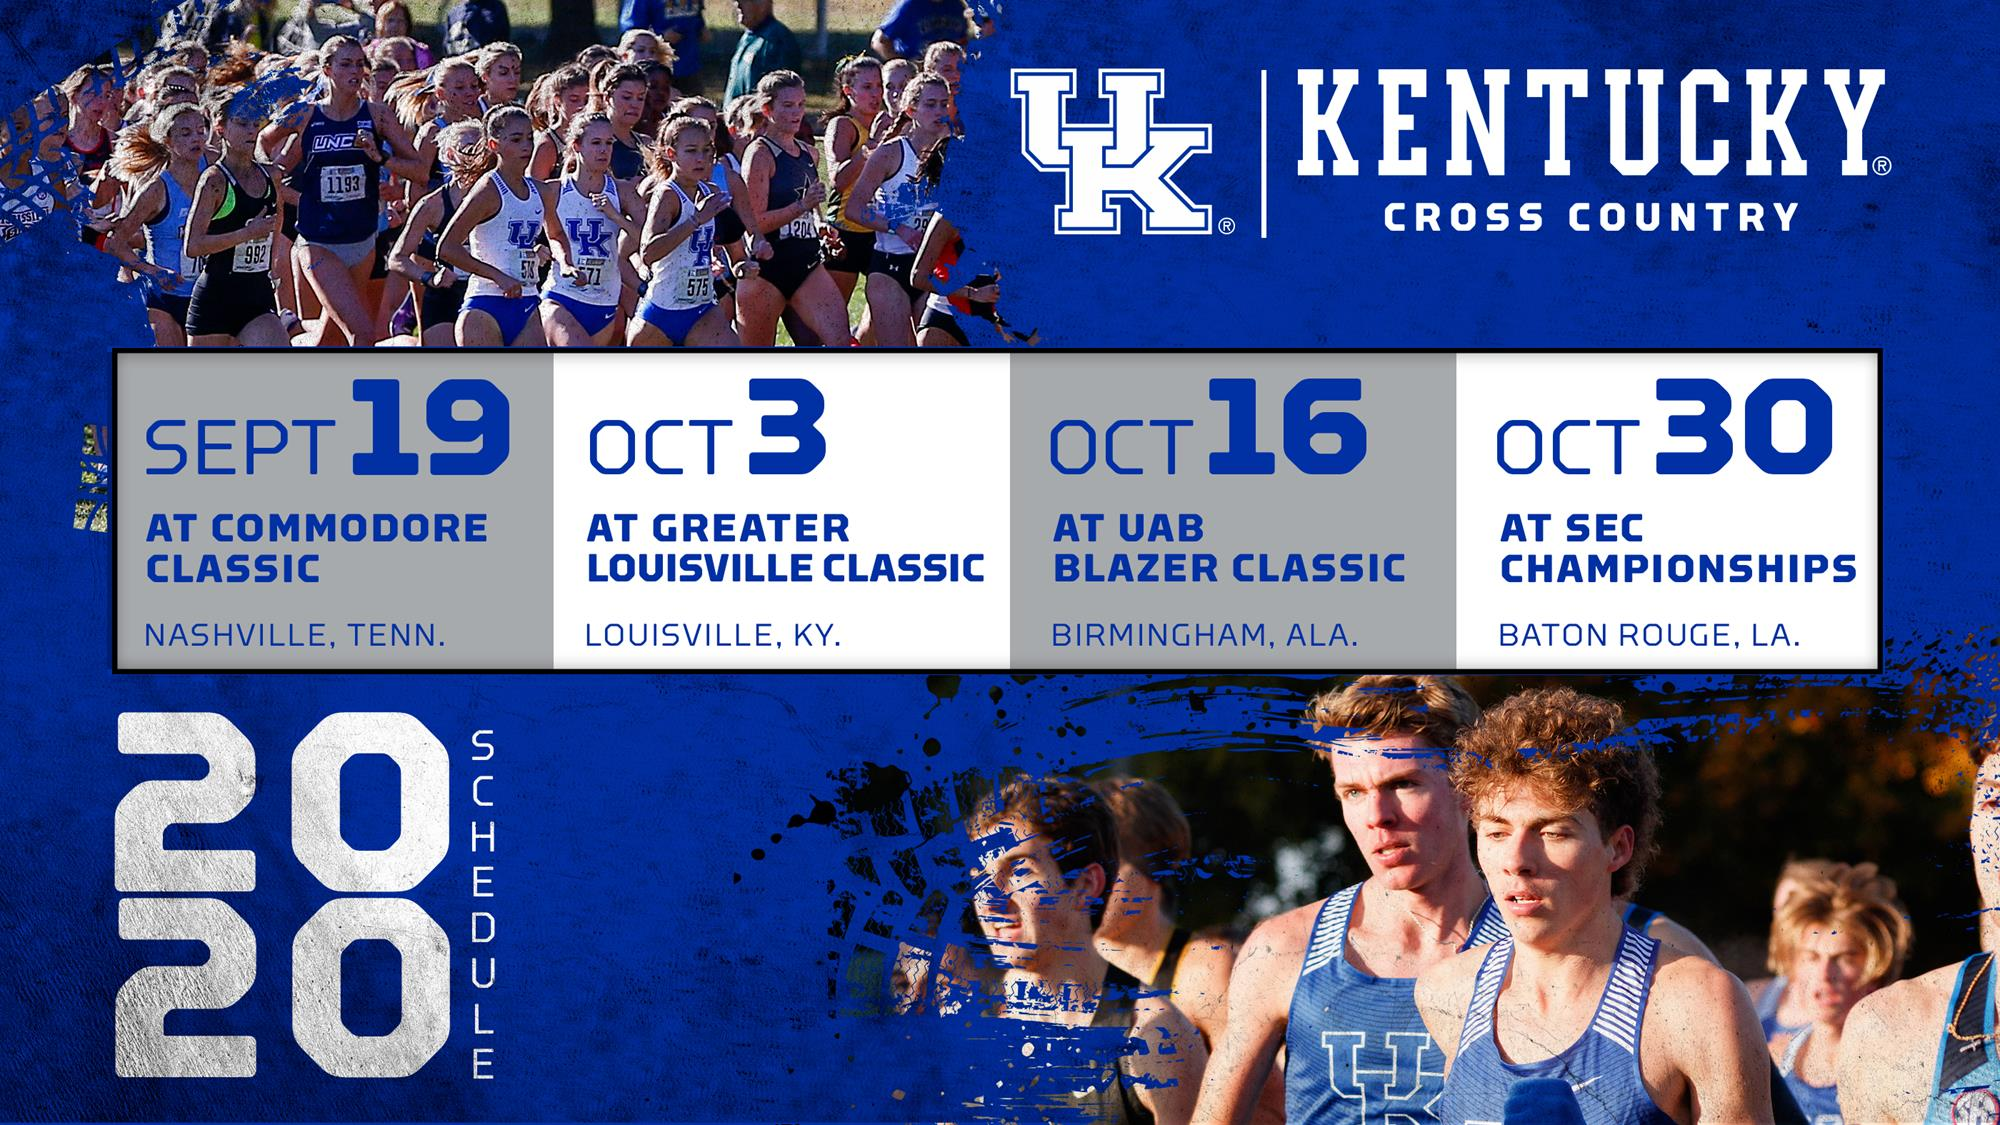 Kentucky Cross Country Schedule Announced